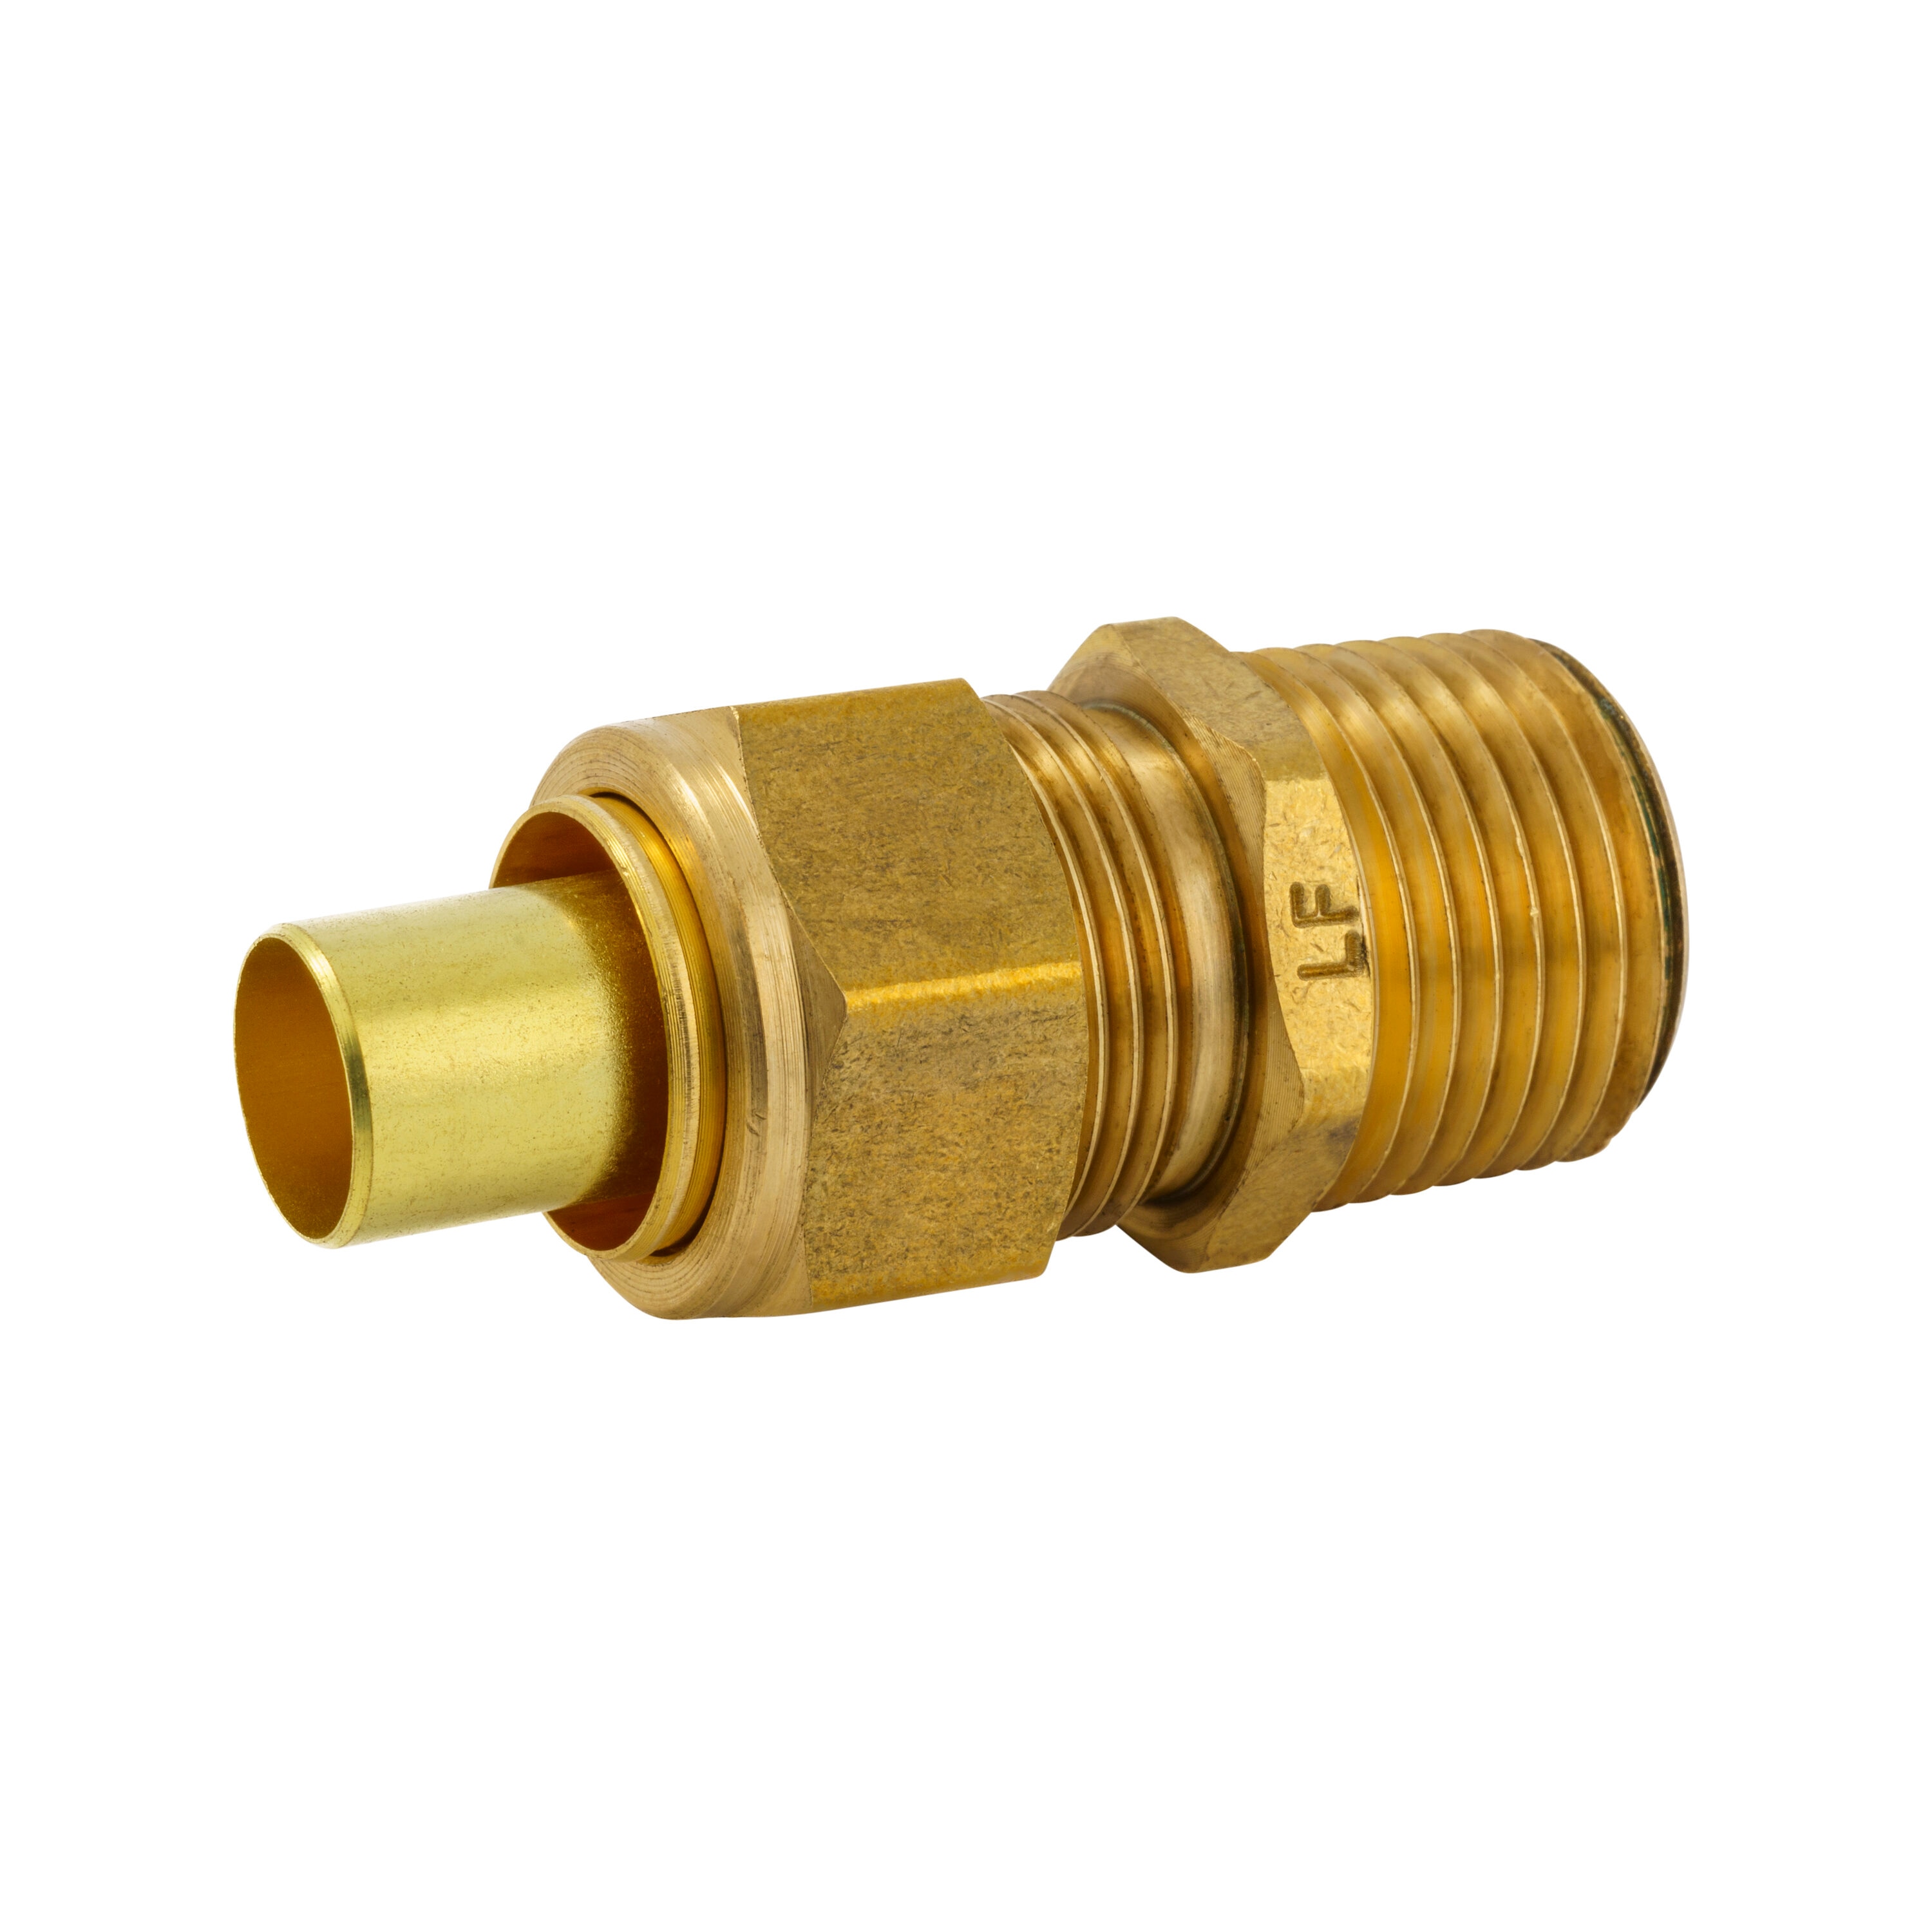 Brass Adapter Threaded Brass Coupler Reducing Brass Pipe Fitting